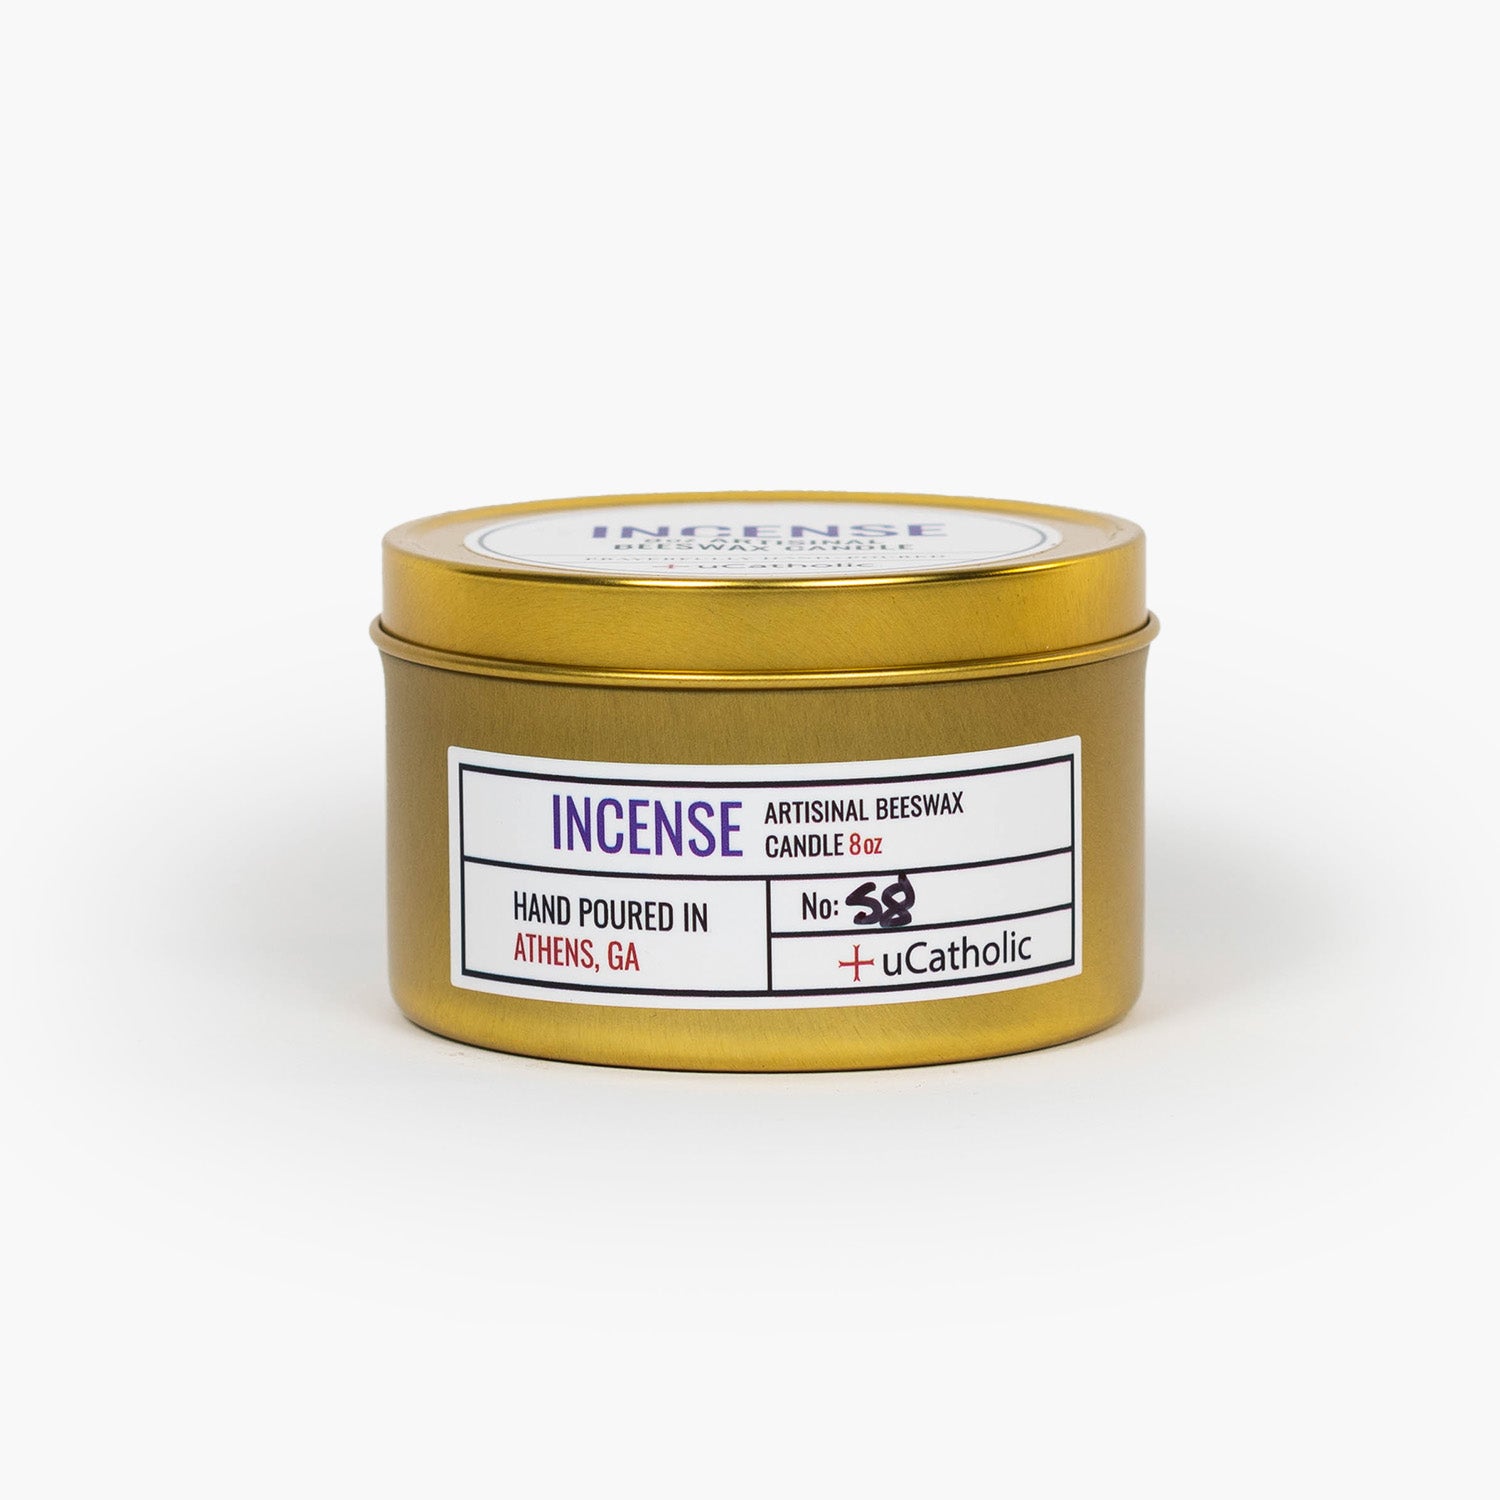 Frankincense Botanical Candle Travel Tin – Wax Apothecary ™